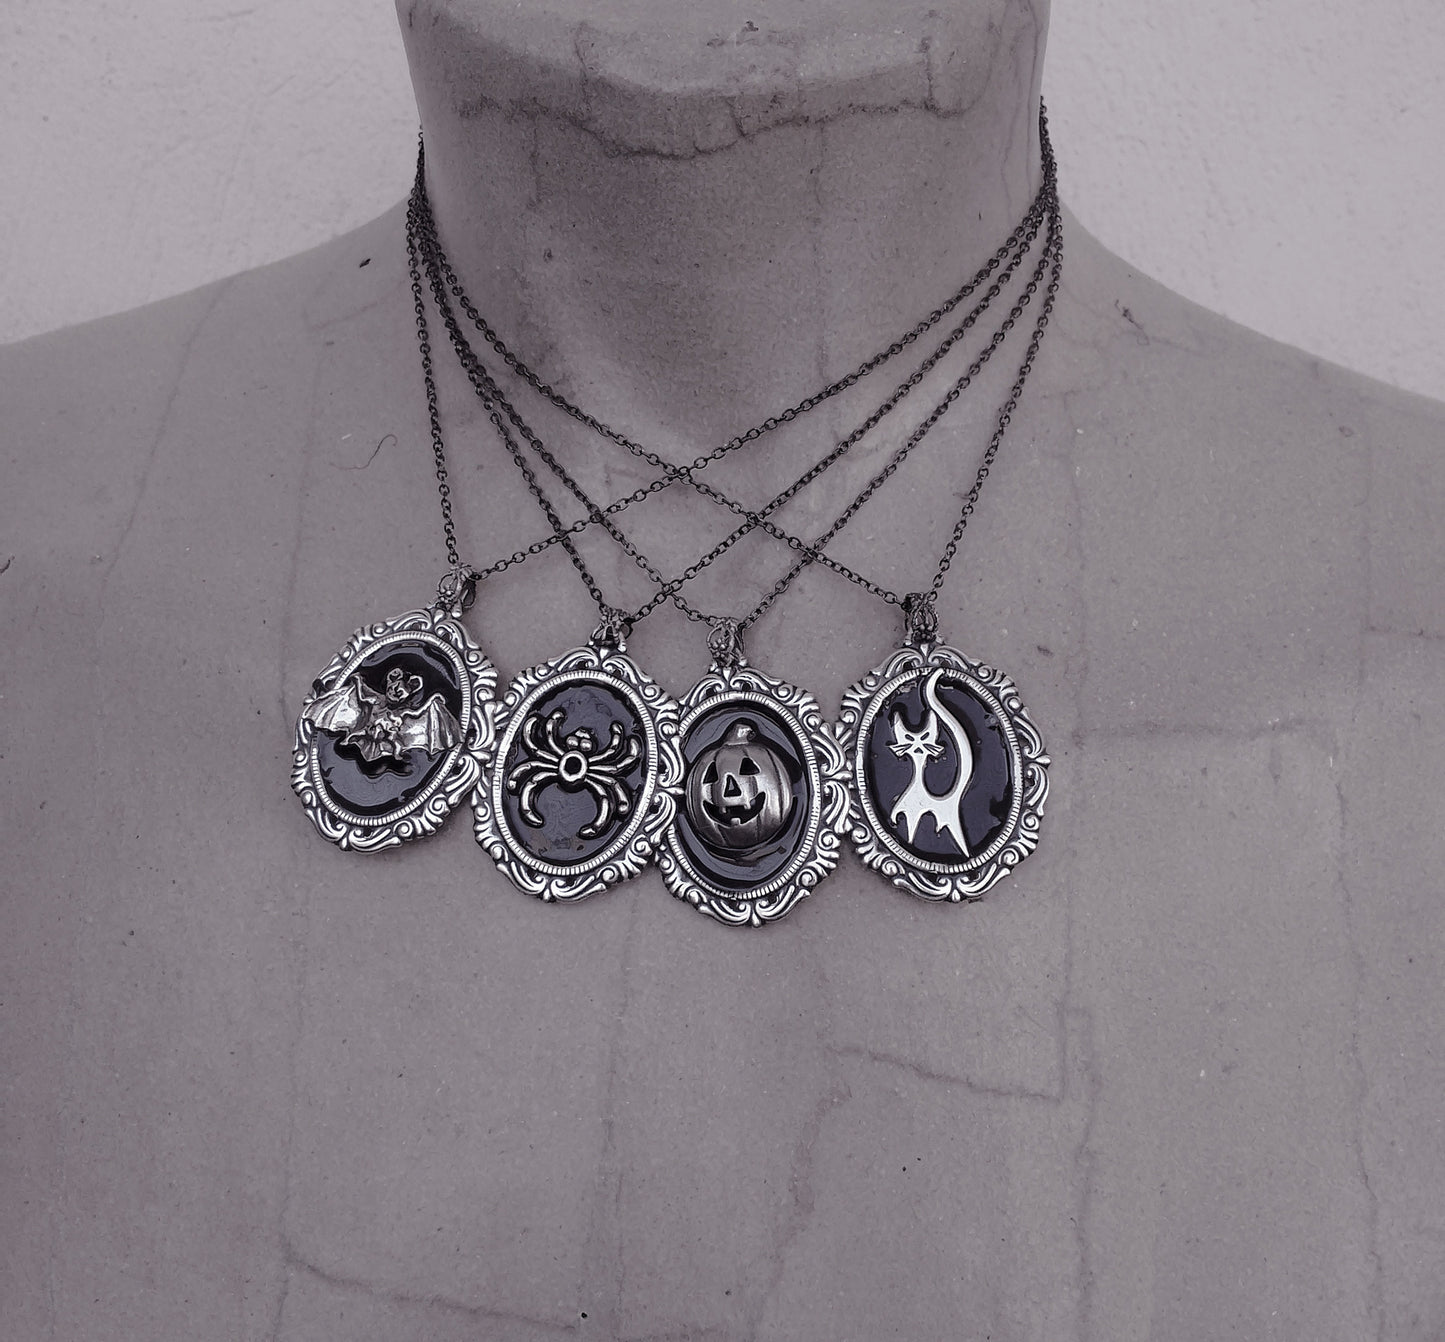 Black Halloween Necklace - Aranwen's Jewelry
 - 3